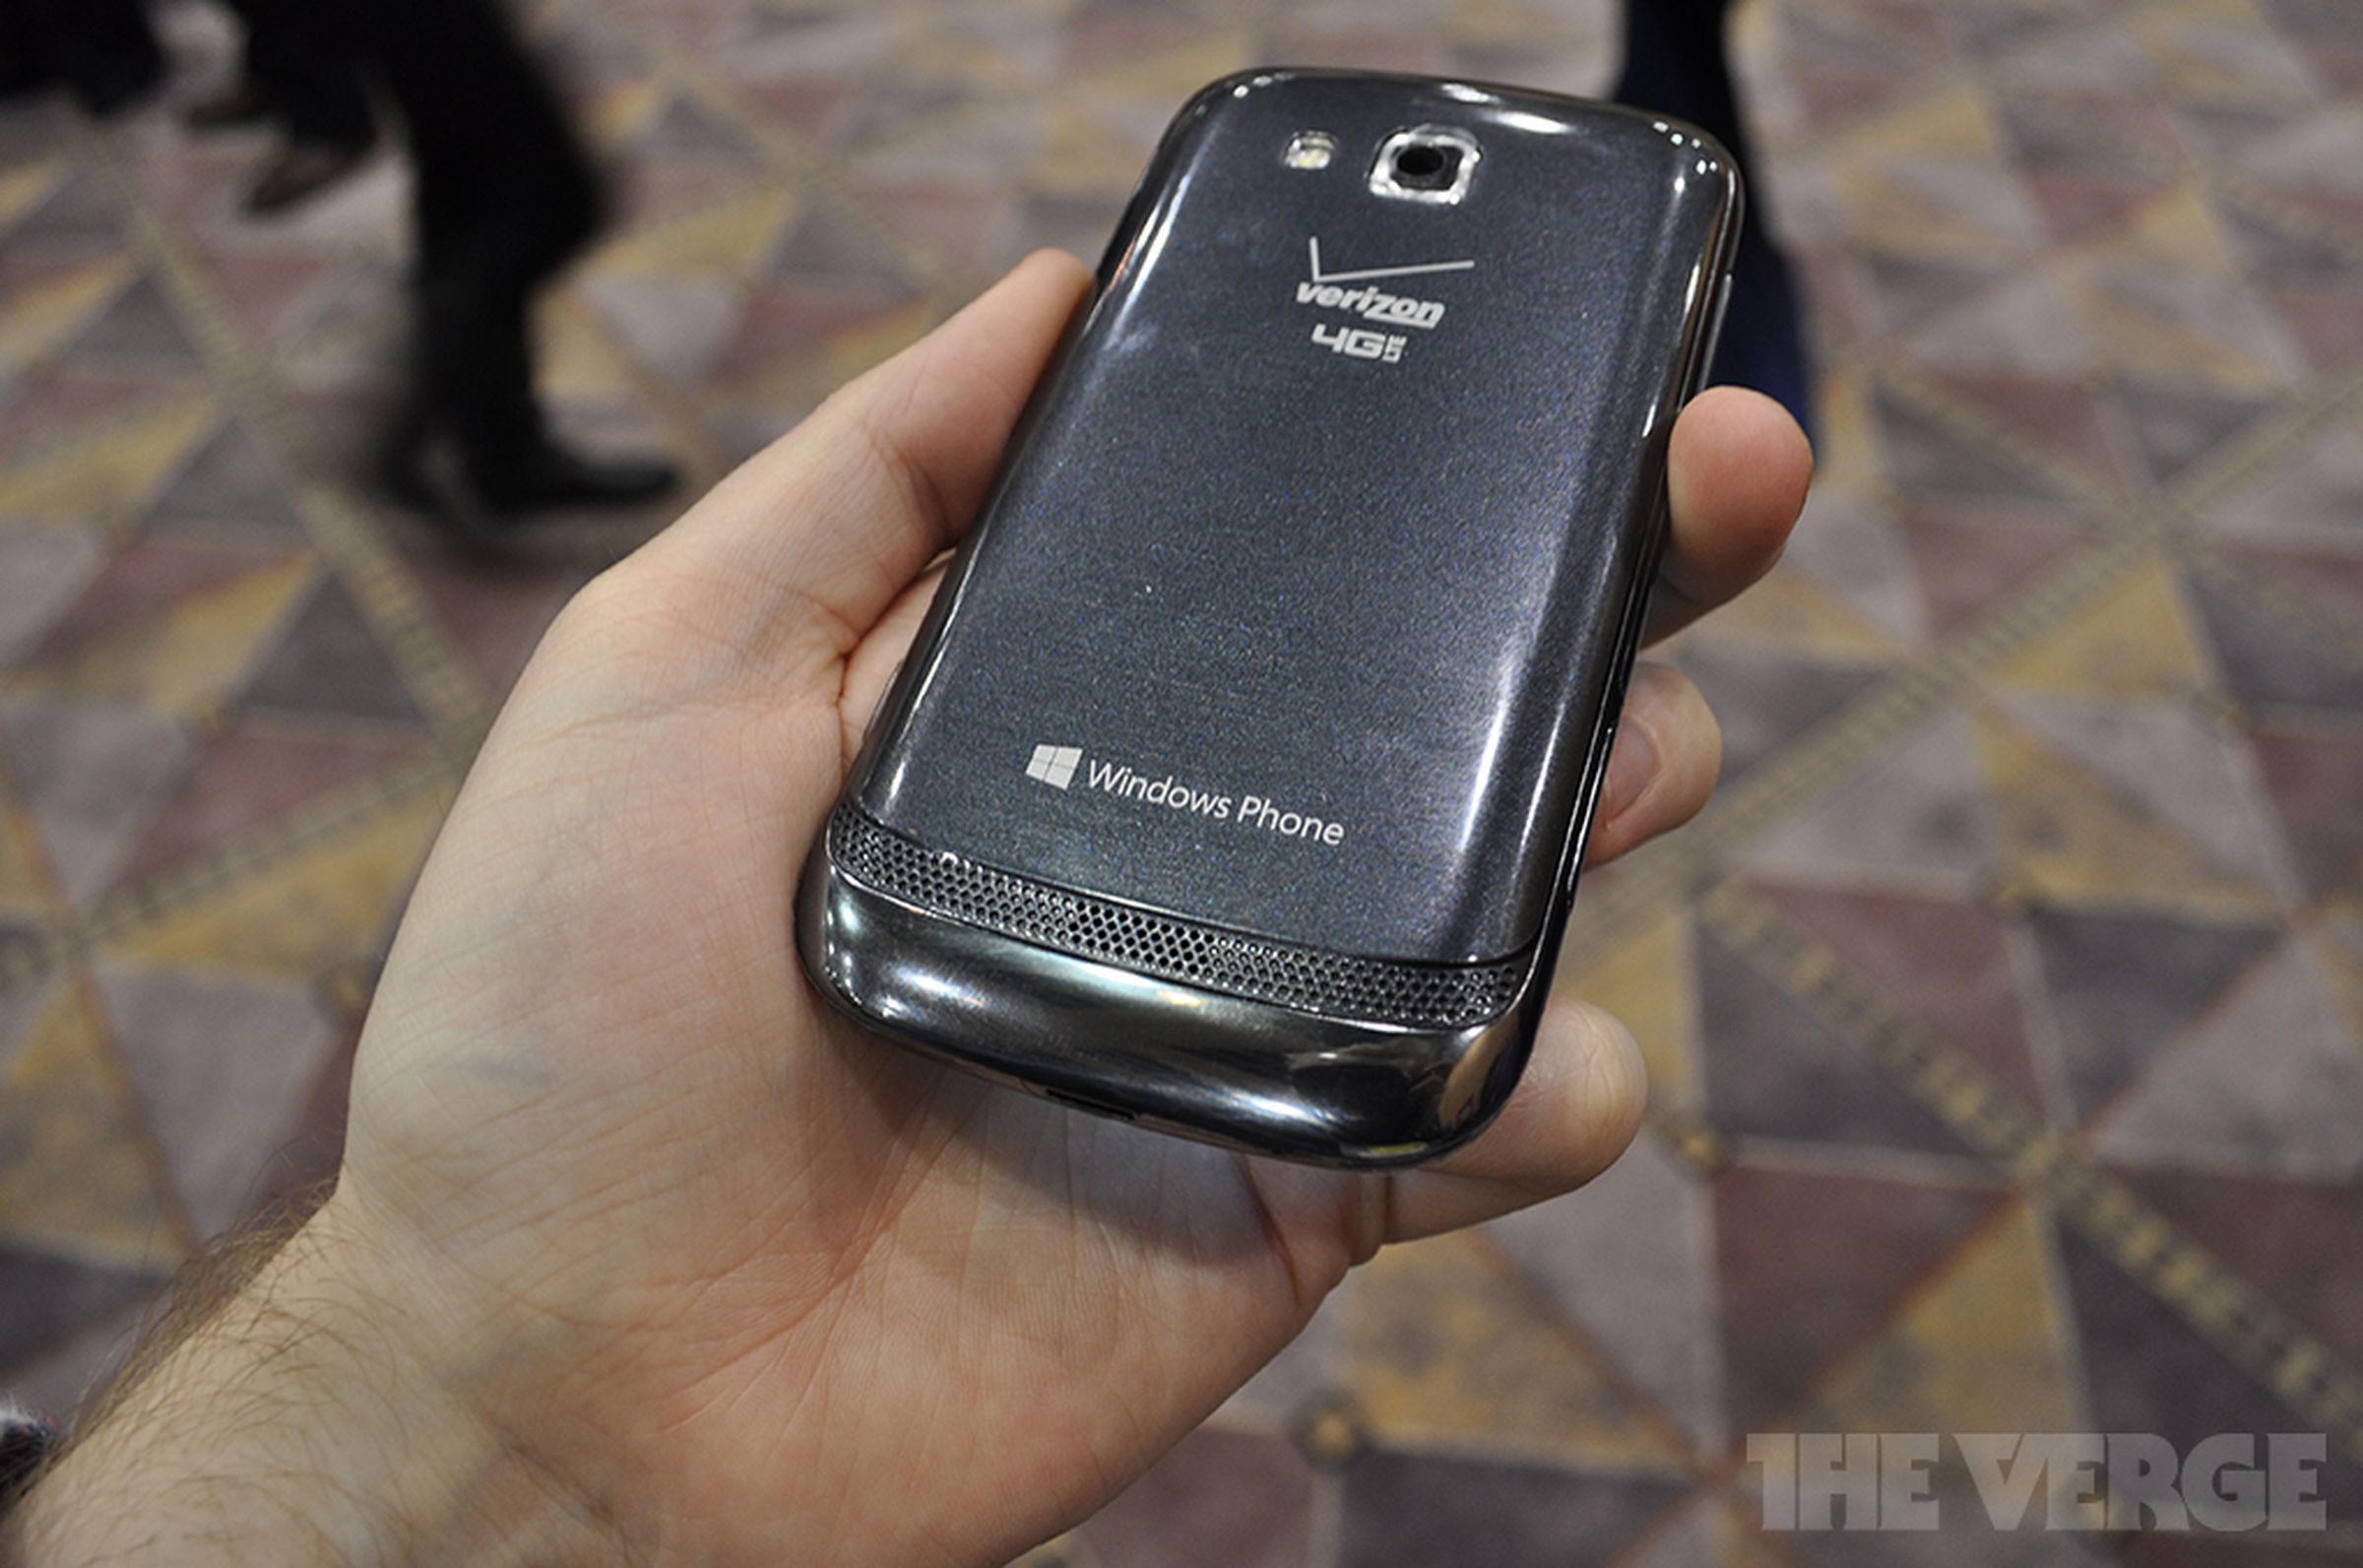 Samsung Ativ Odyssey Windows Phone 8 hands-on photos